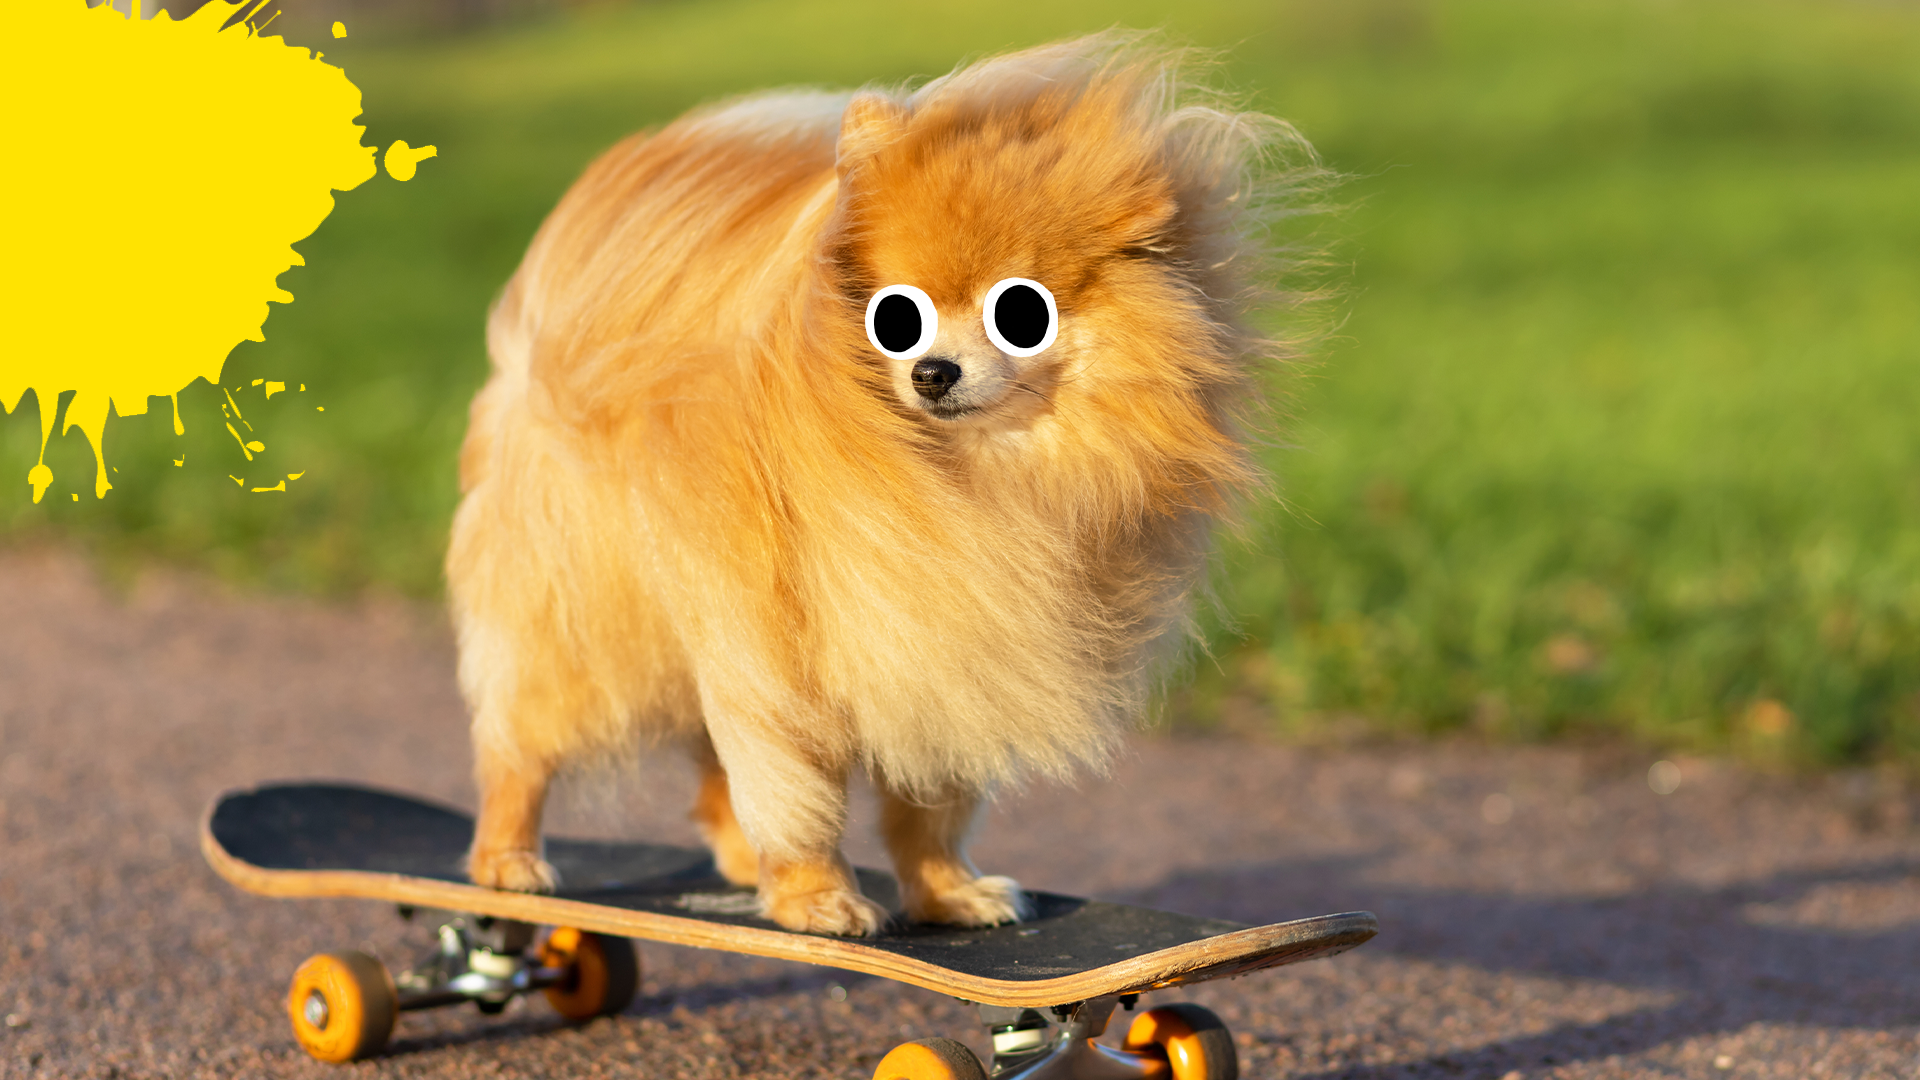 Dog on skateboard  with splat